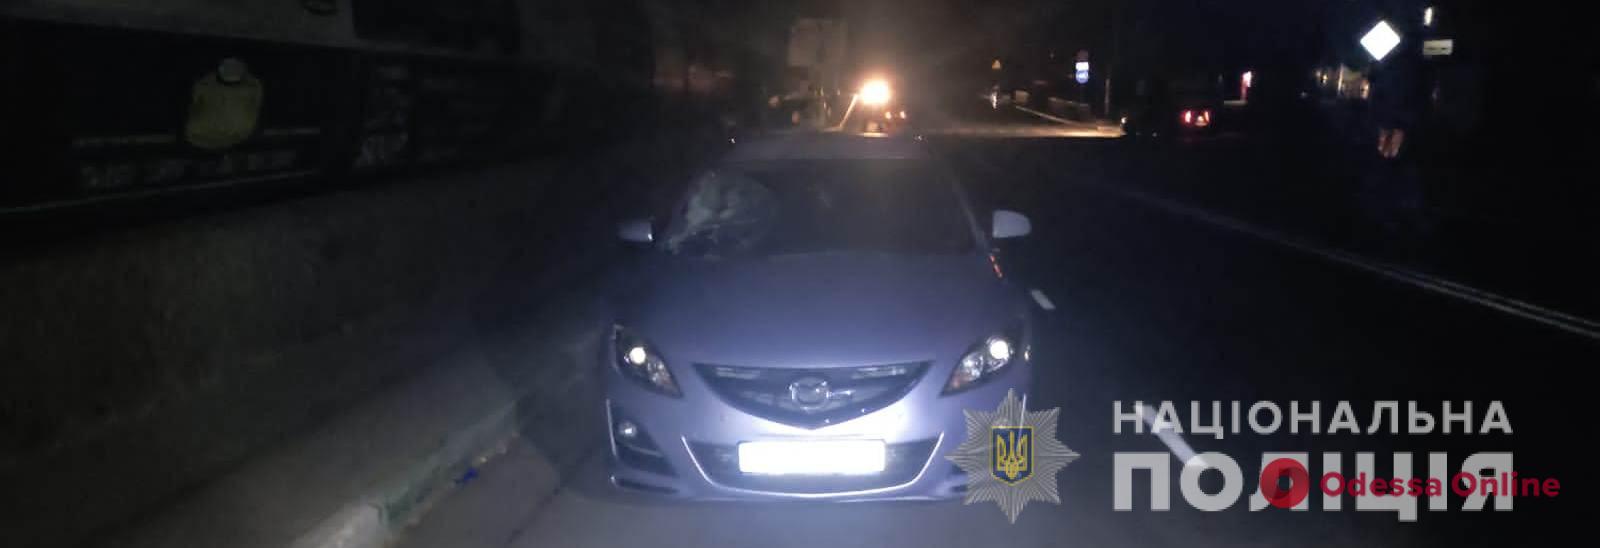 В Черноморске Mazda сбила 22-летнюю девушку